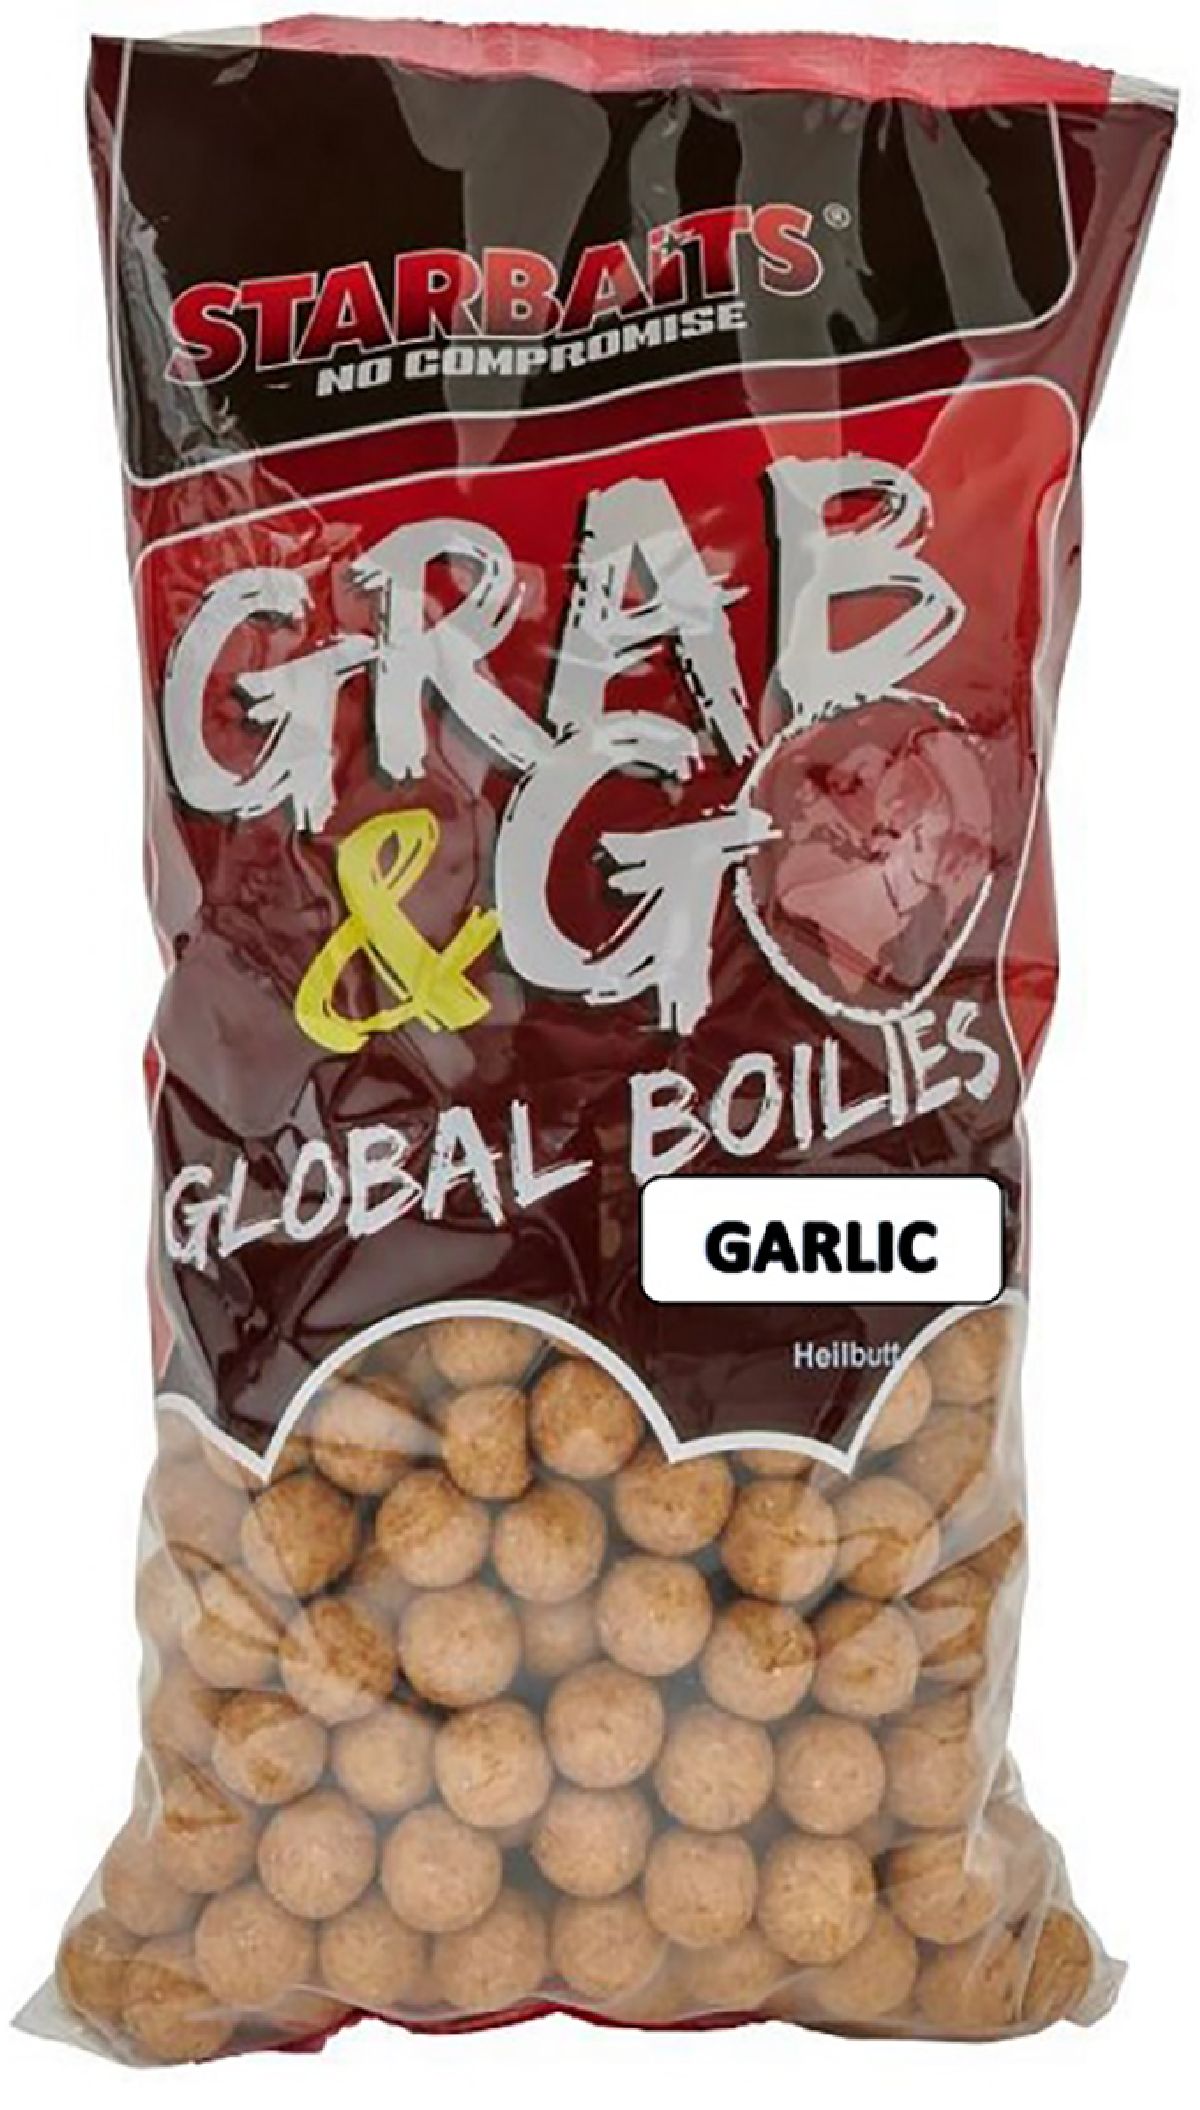 Starbaits Grab & Go Global Boilies 20mm 1Kg Garlic